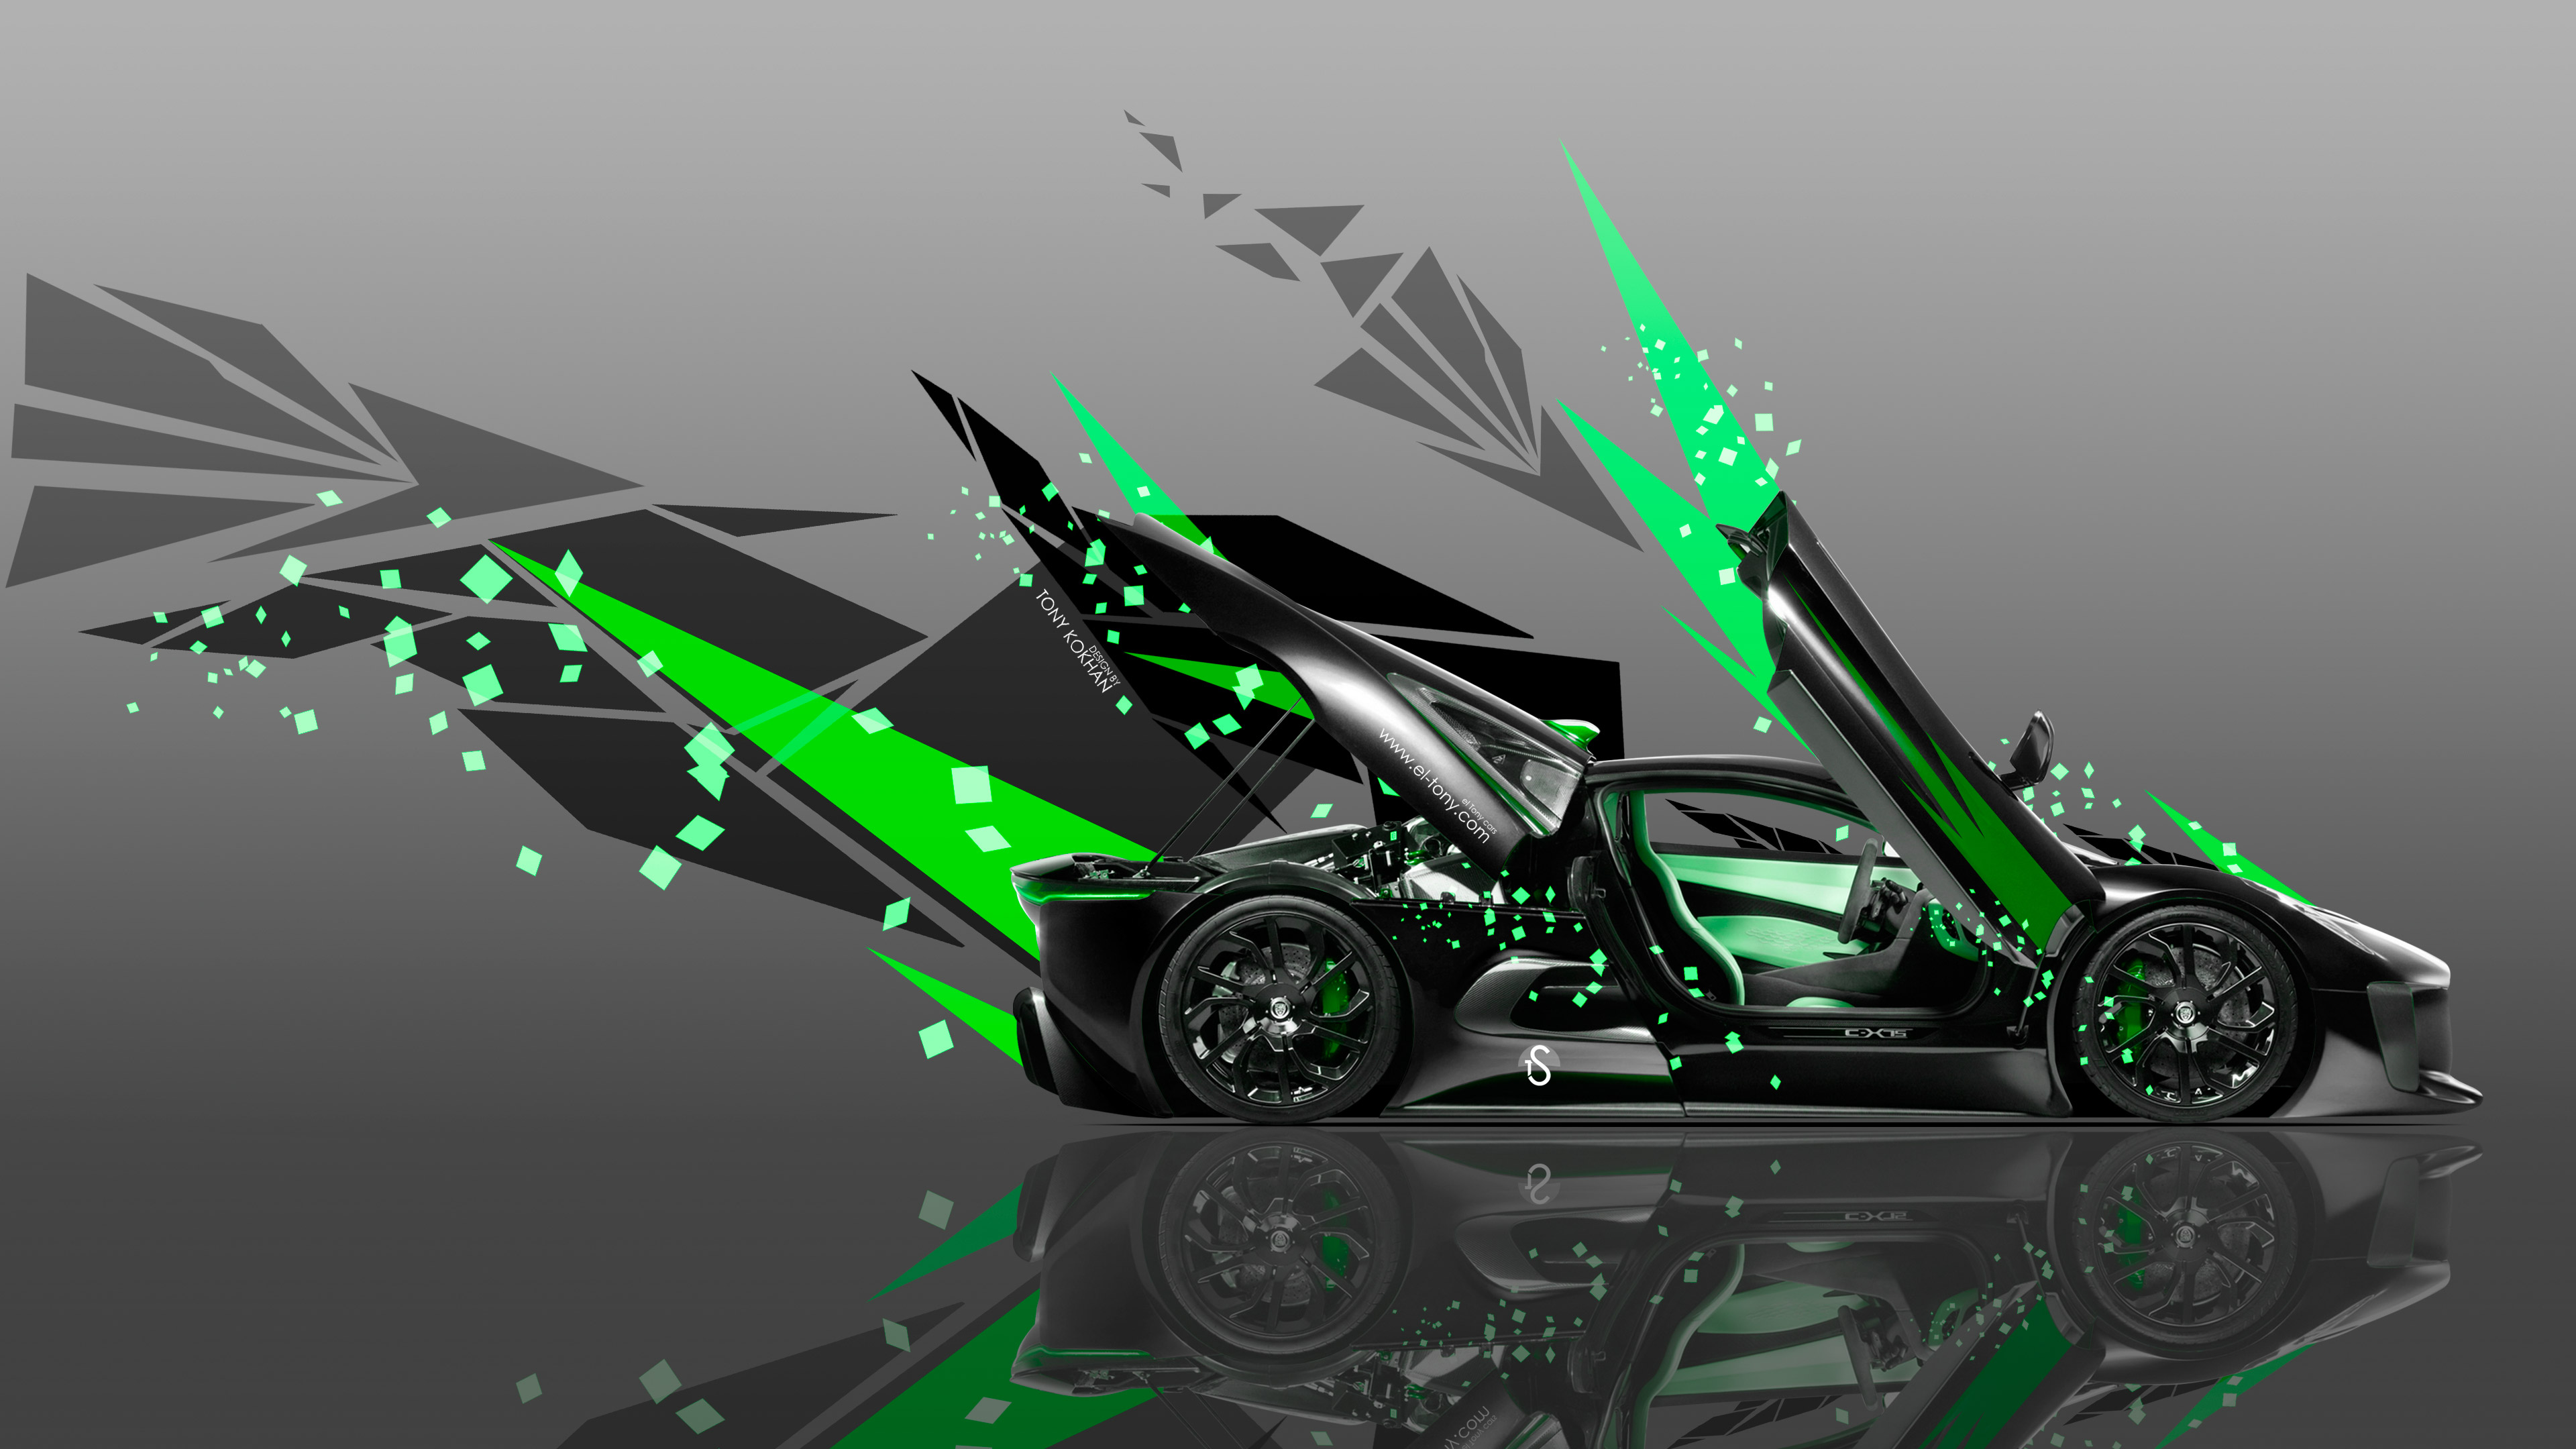 Jaguar-C-X75-Hybrid-Open-Door-Hood-Side-Abstract-Transformer-Car-2014-Art-Green-Colors-4K-Wallpapers-design-by-Tony-Kokhan-www.el-tony.com_.jpg